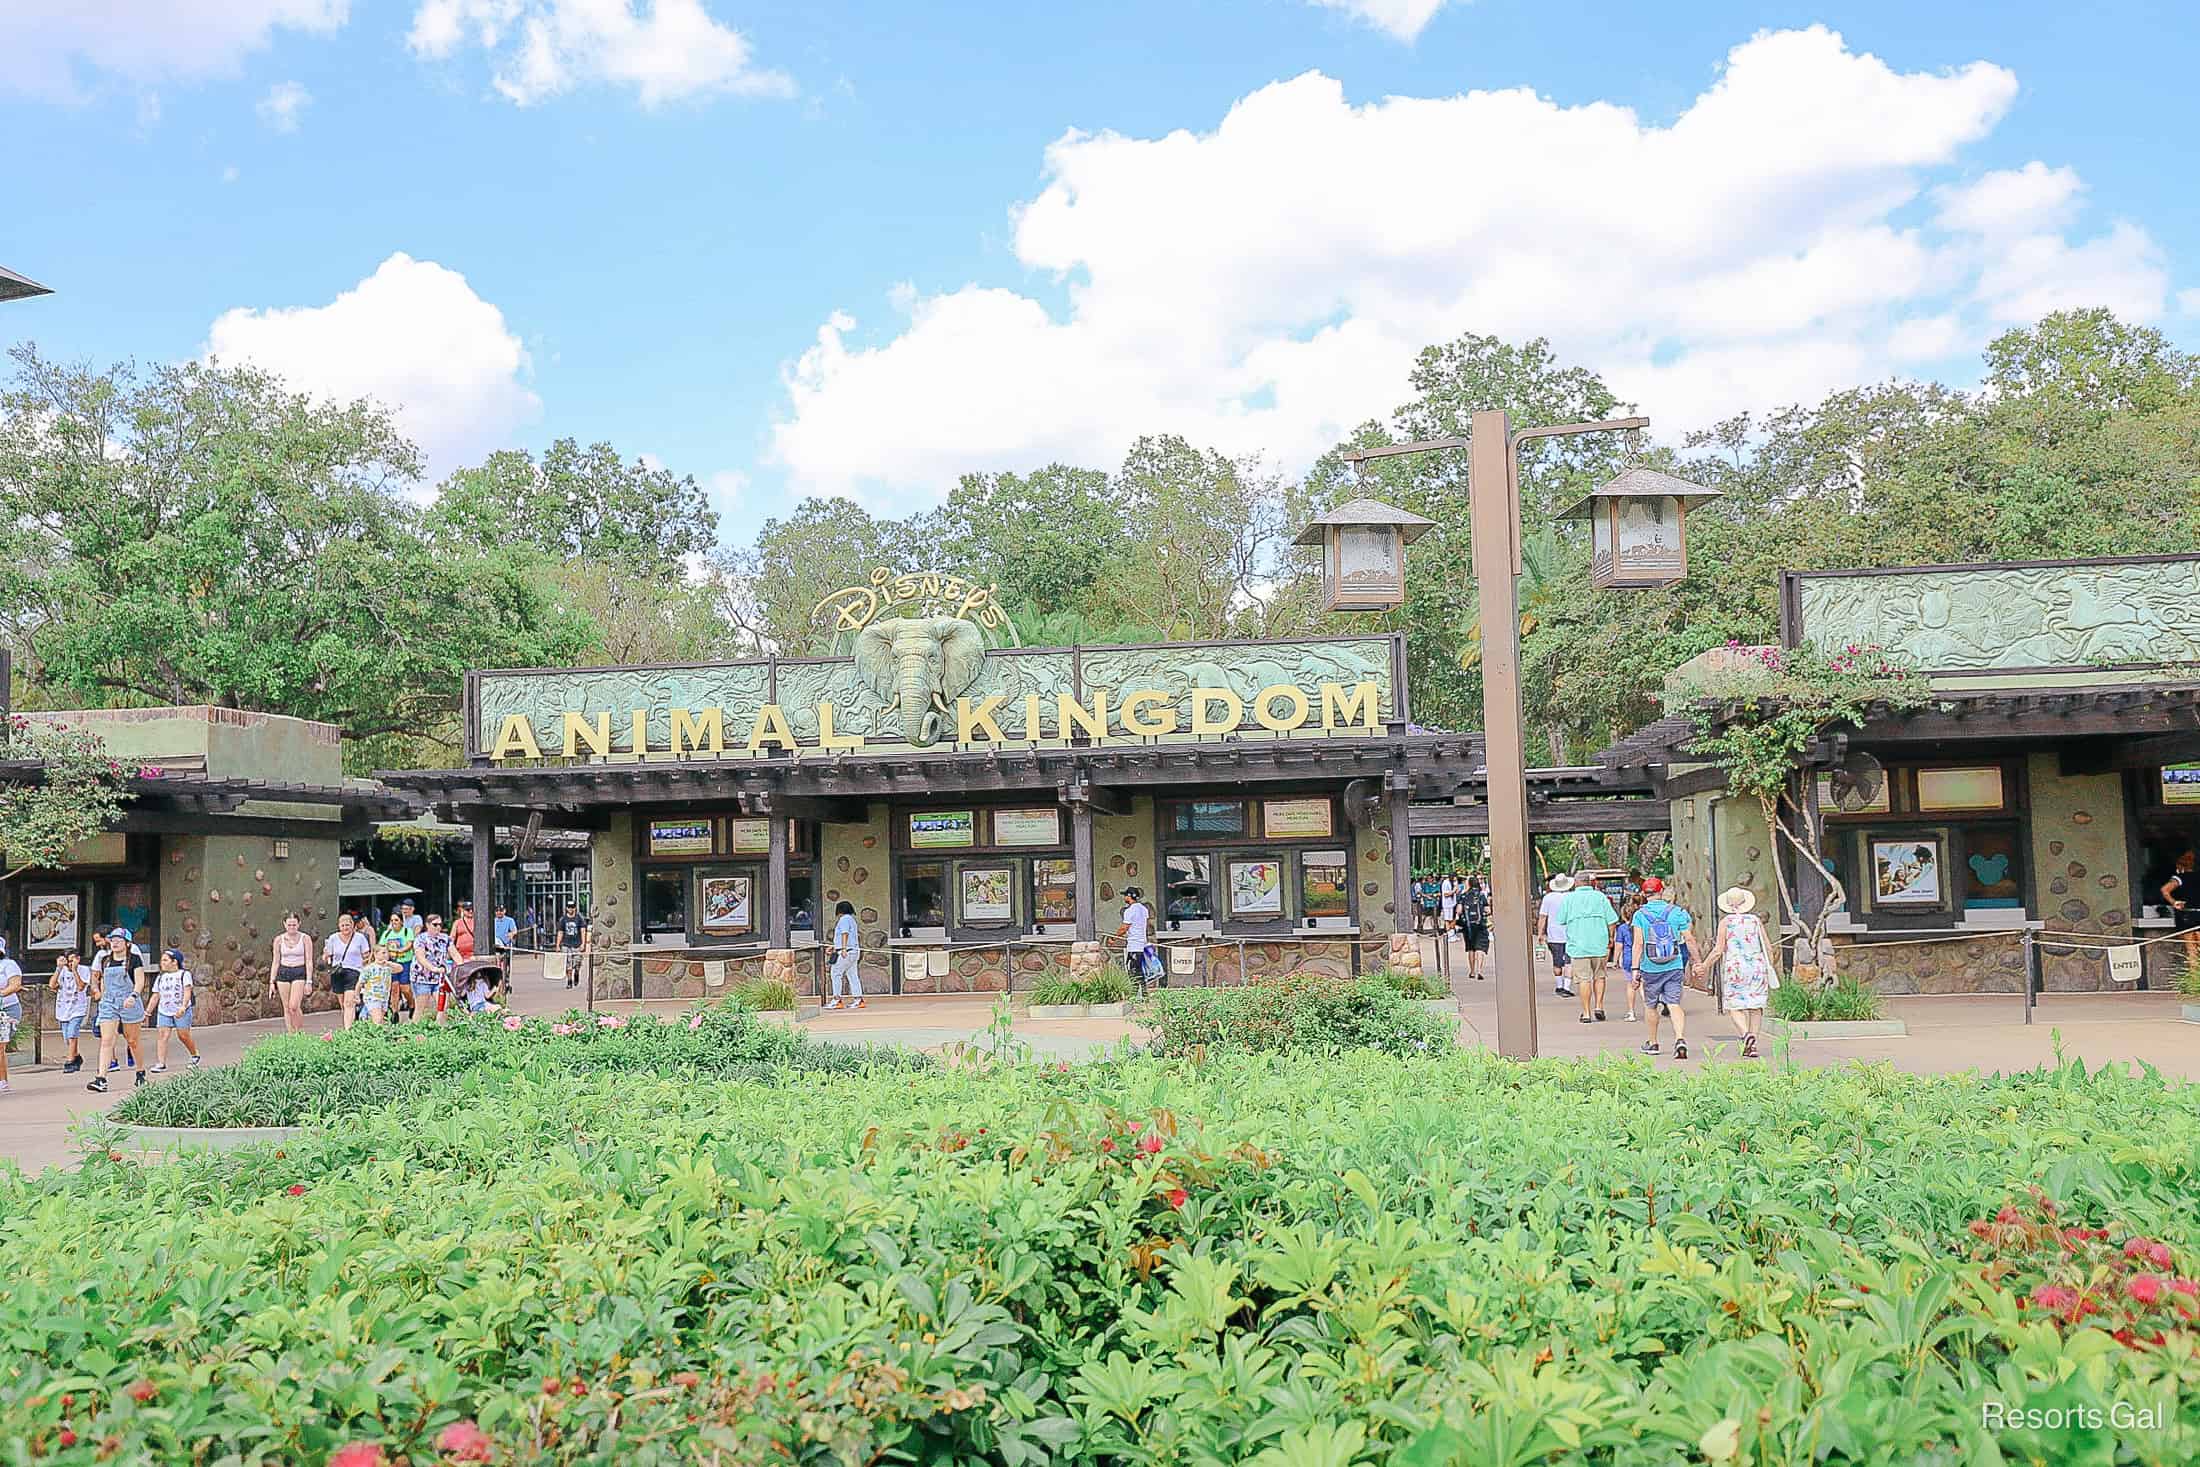 Disney's Animal Kingdom entrance sign